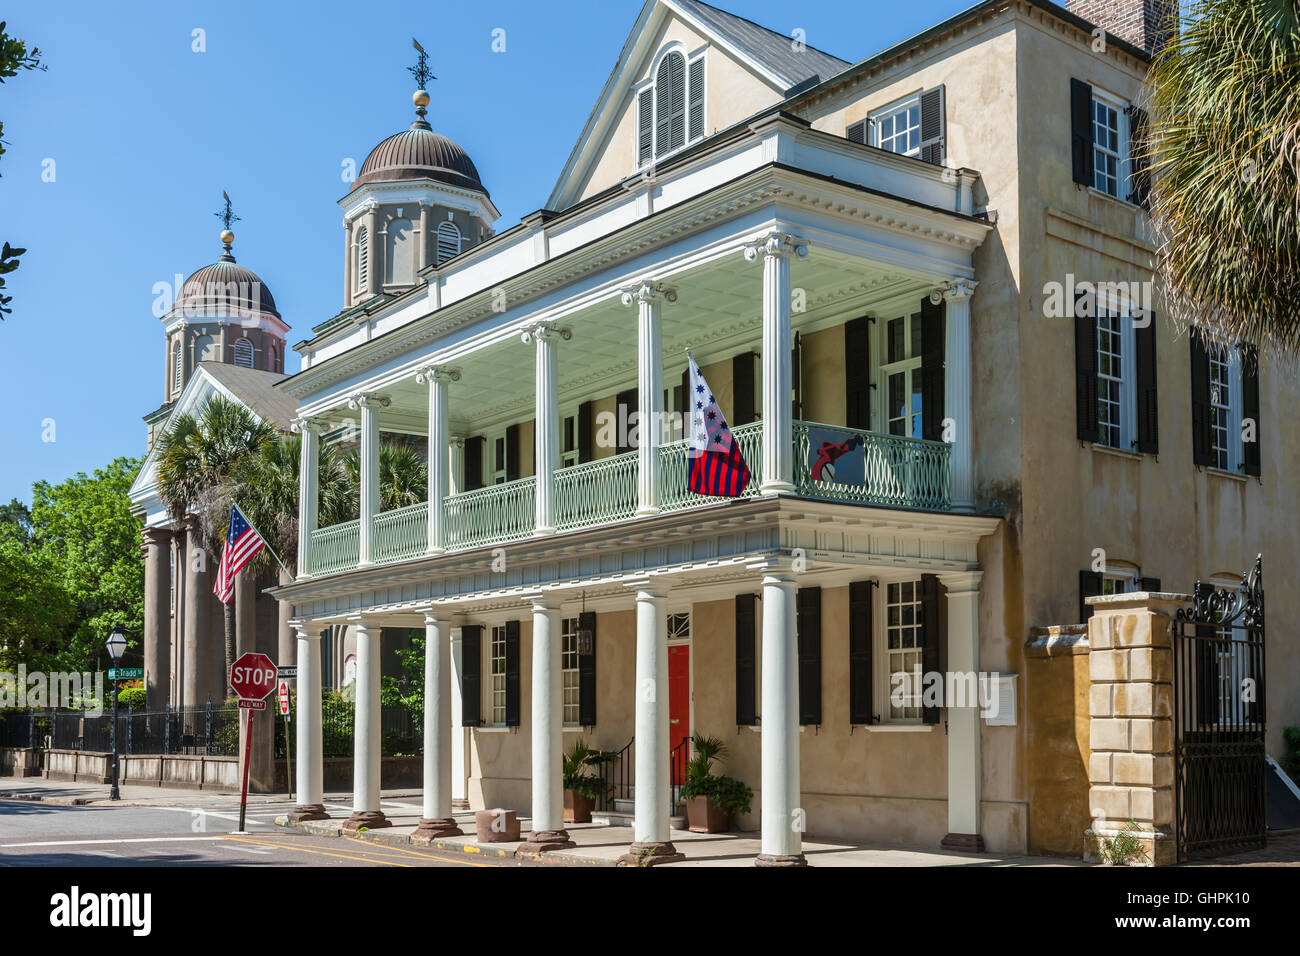 The historic antebellum Branford-Horry House on Meeting Street in Charleston, South Carolina. Stock Photo